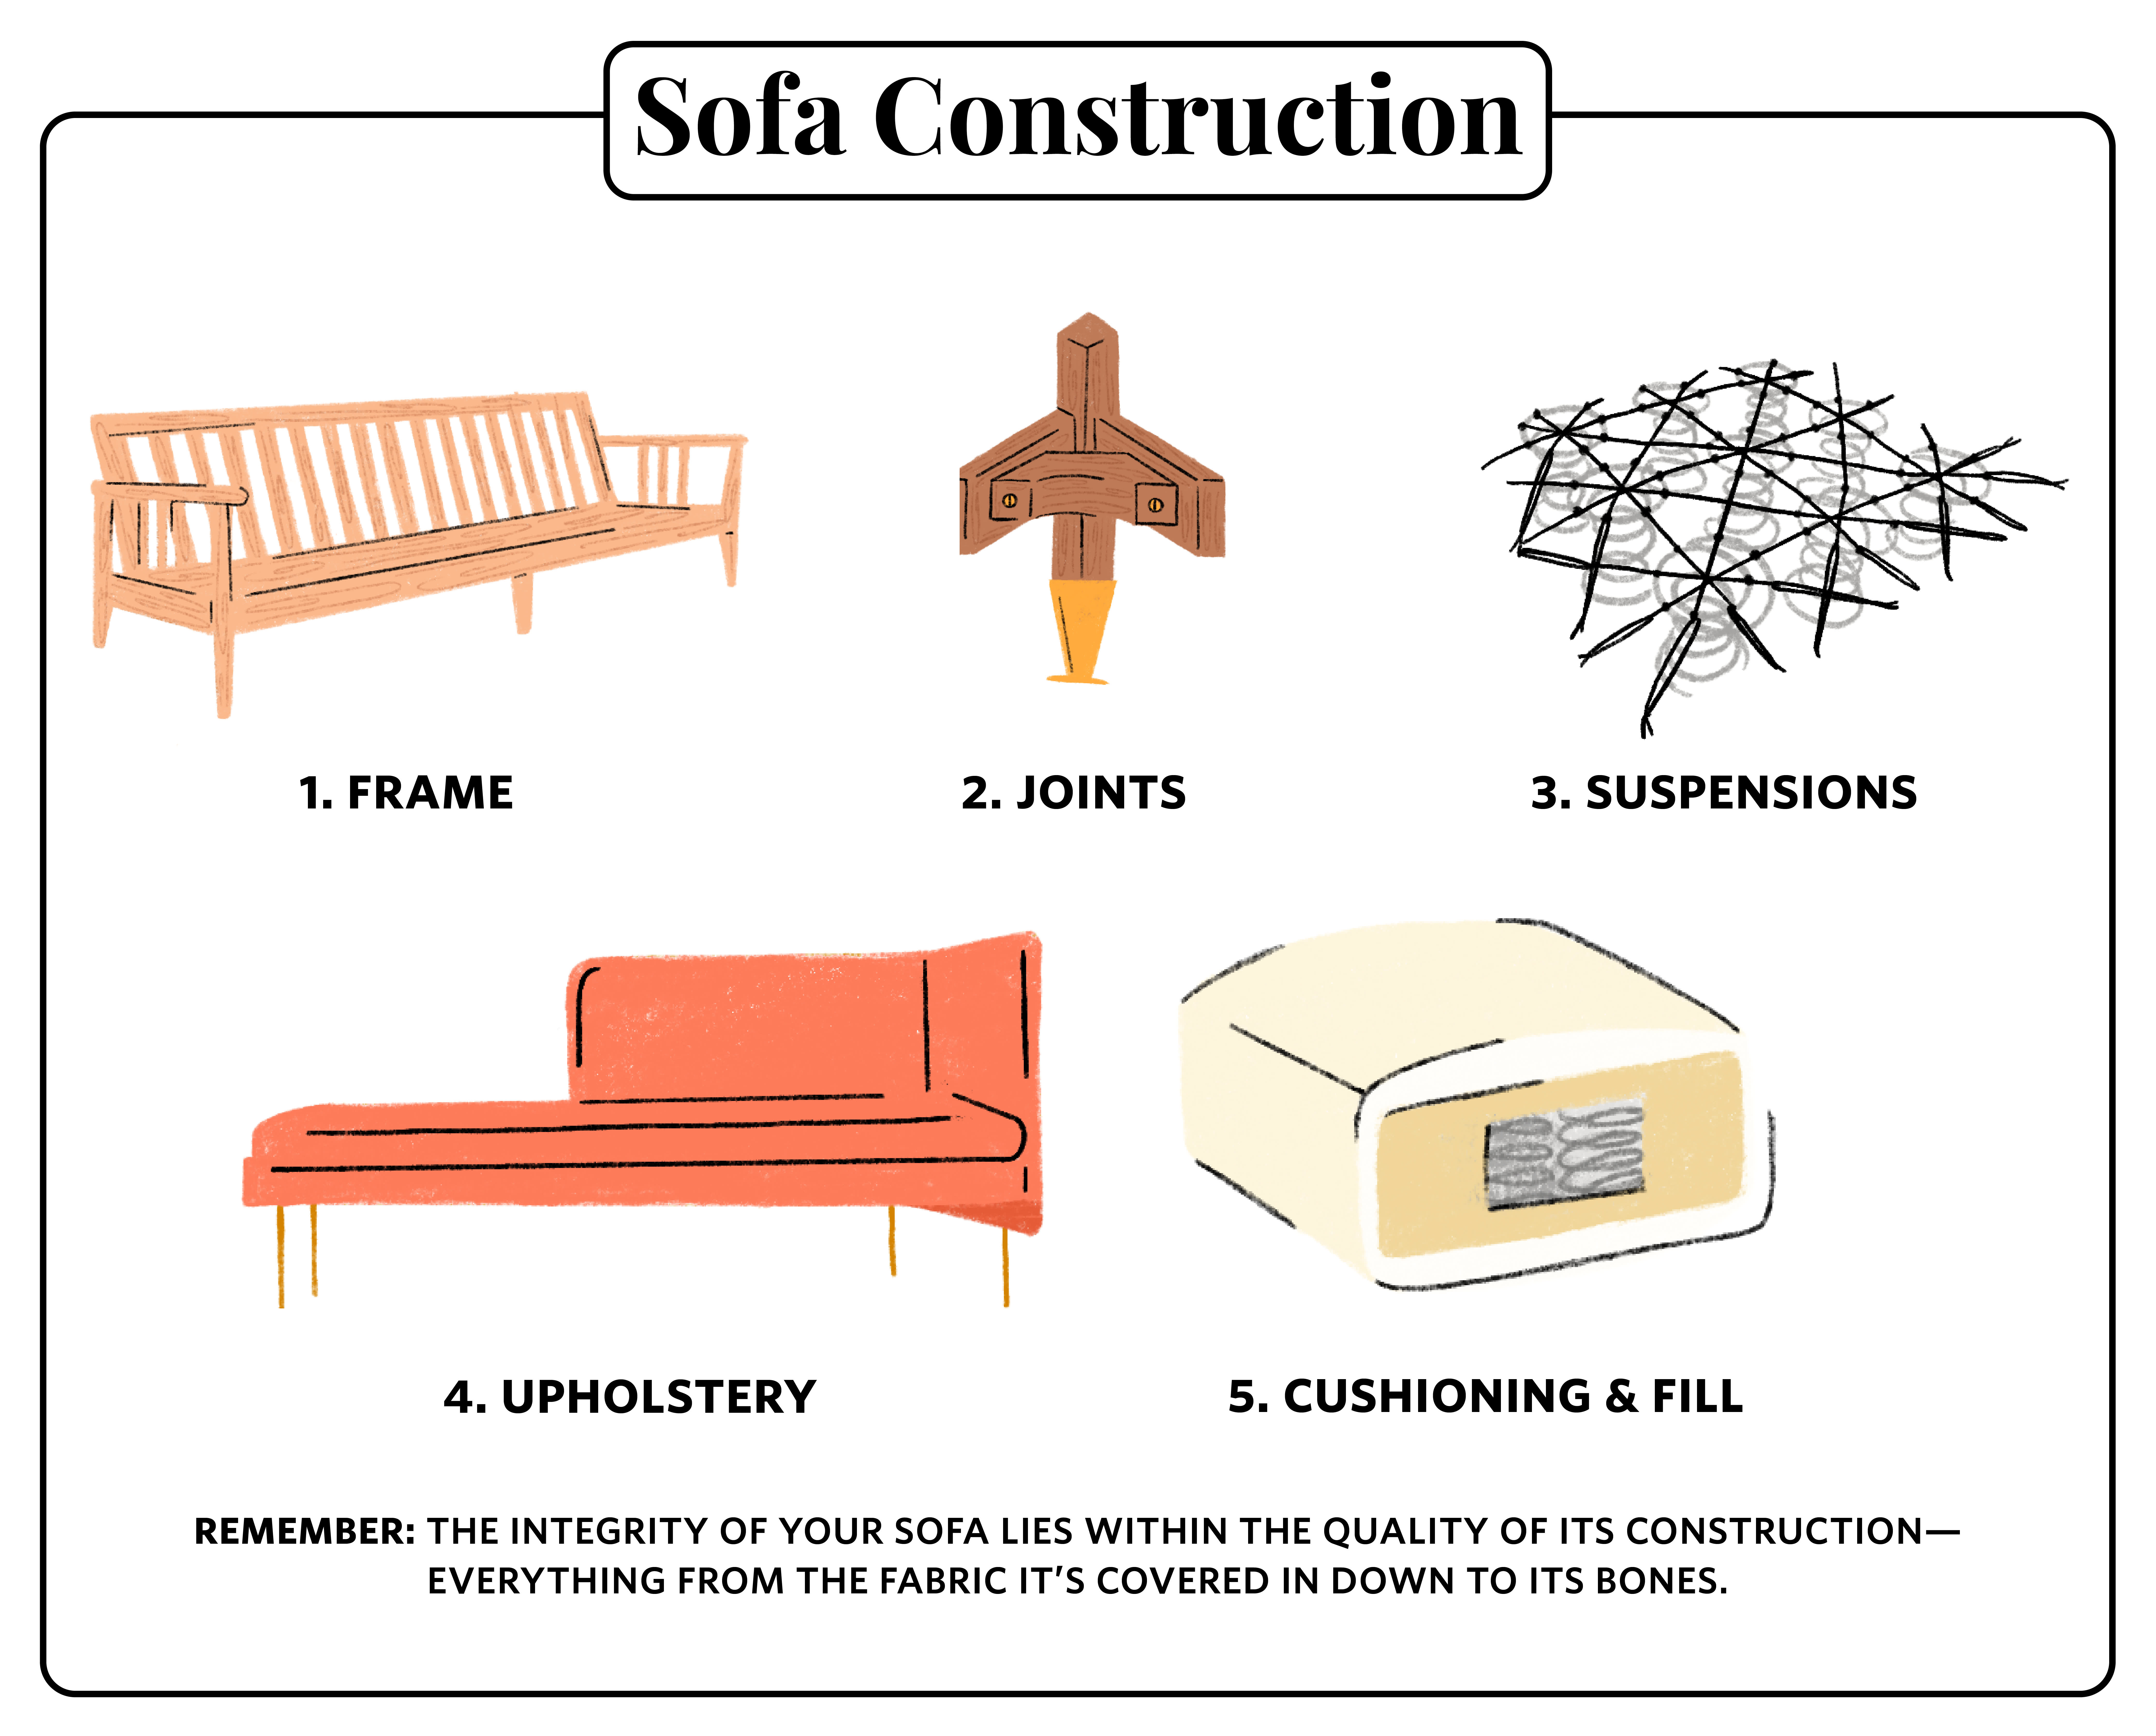 https://cdn.apartmenttherapy.info/image/upload/v1599060393/at/art/design/2020-09/sofa-buying-guide/sofa-guide-construction.jpg